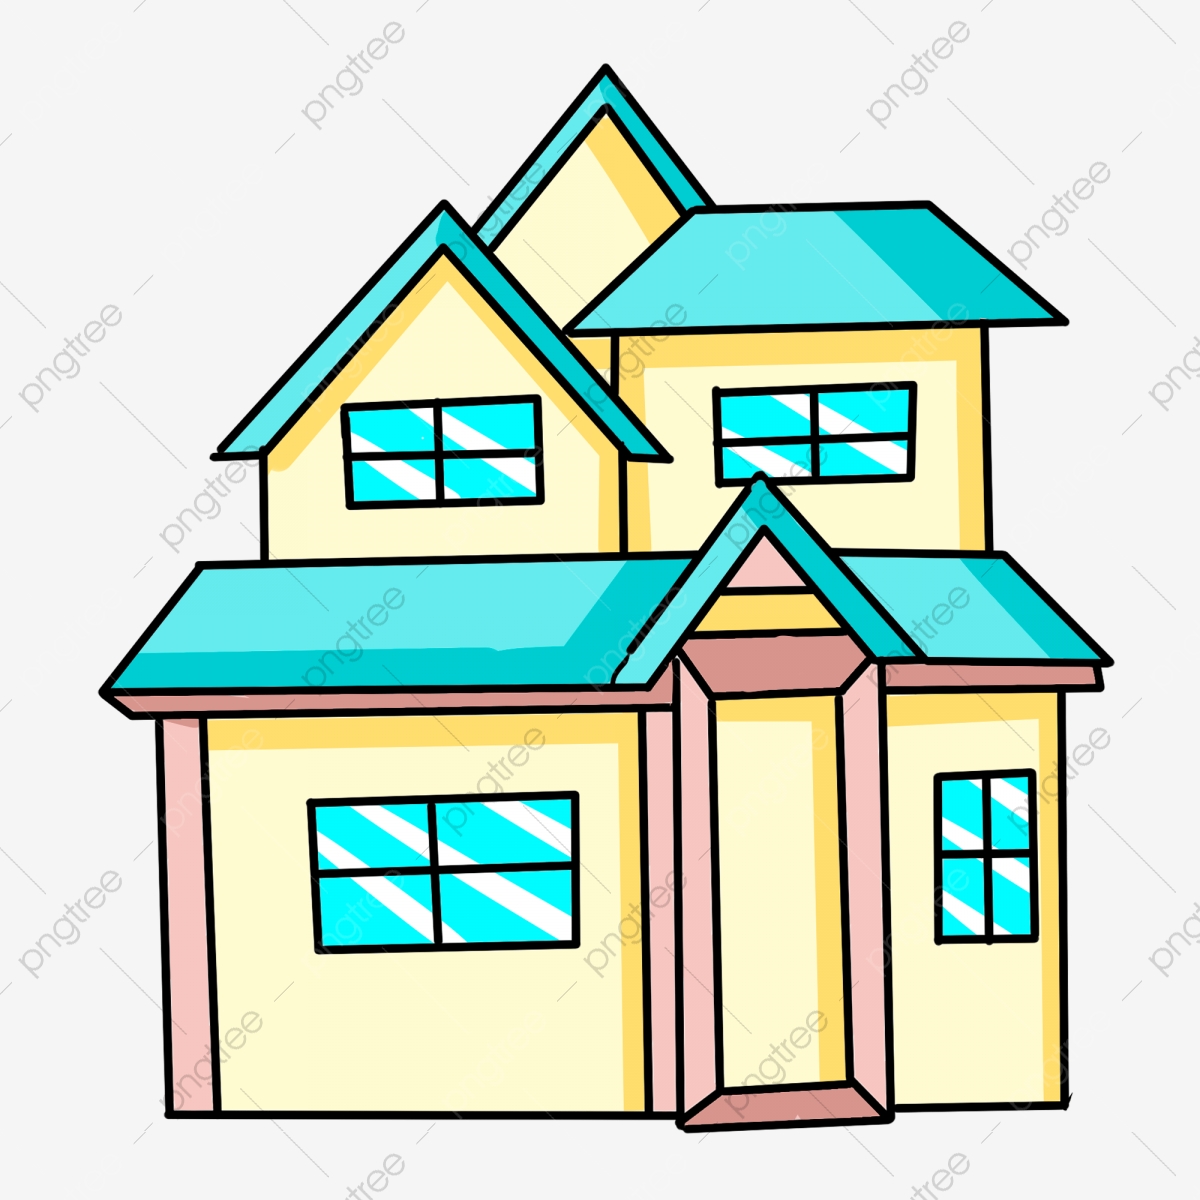 houses clipart geometric